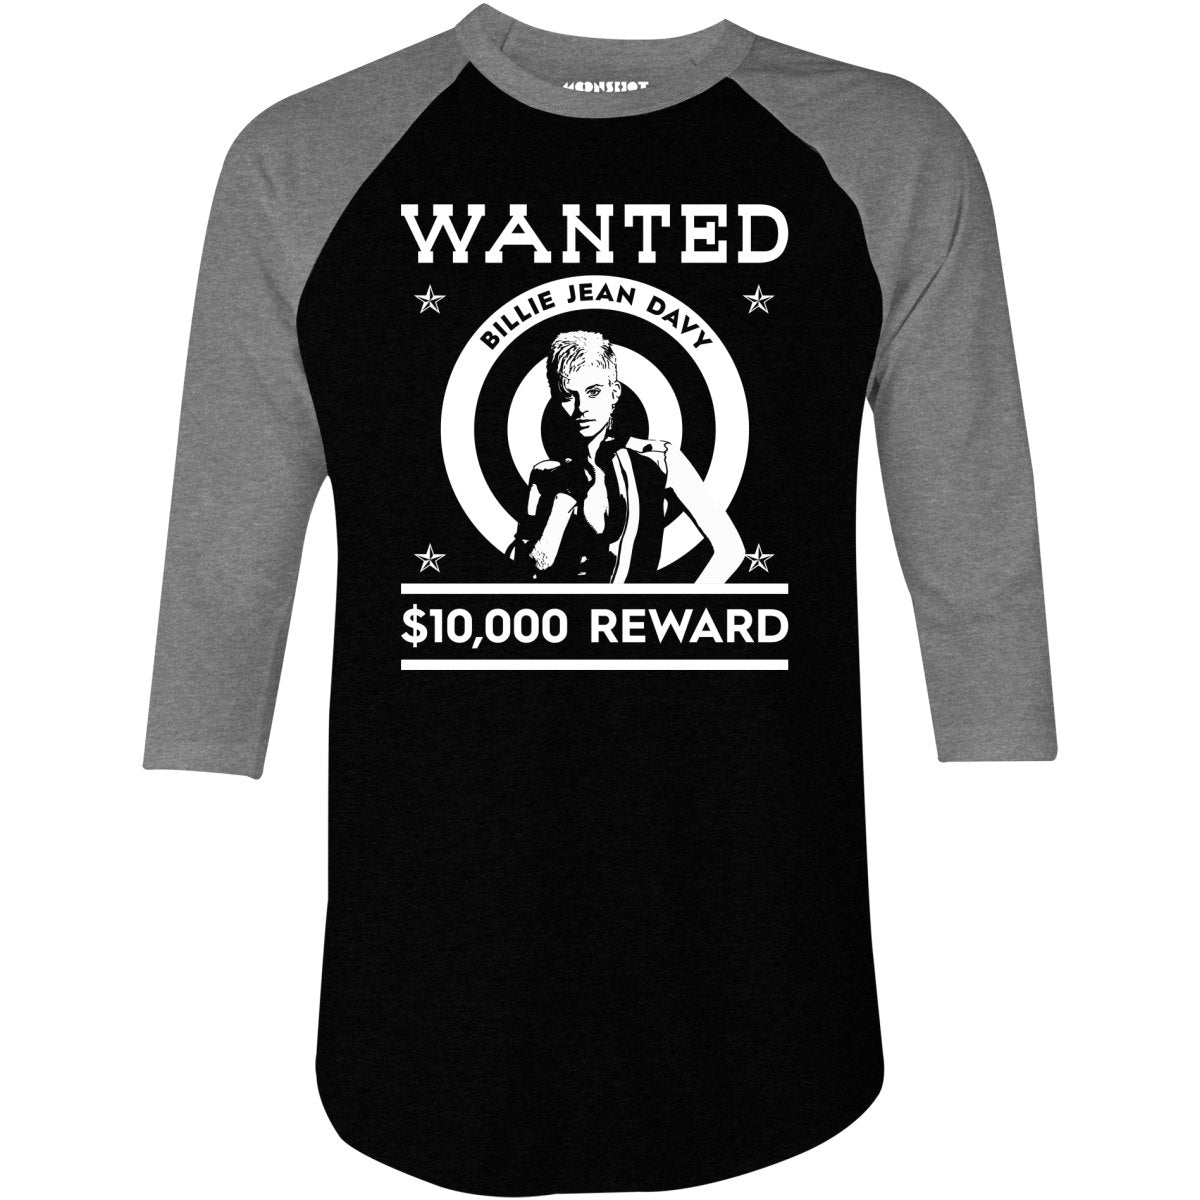 Wanted - Billie Jean Davy - 3/4 Sleeve Raglan T-Shirt